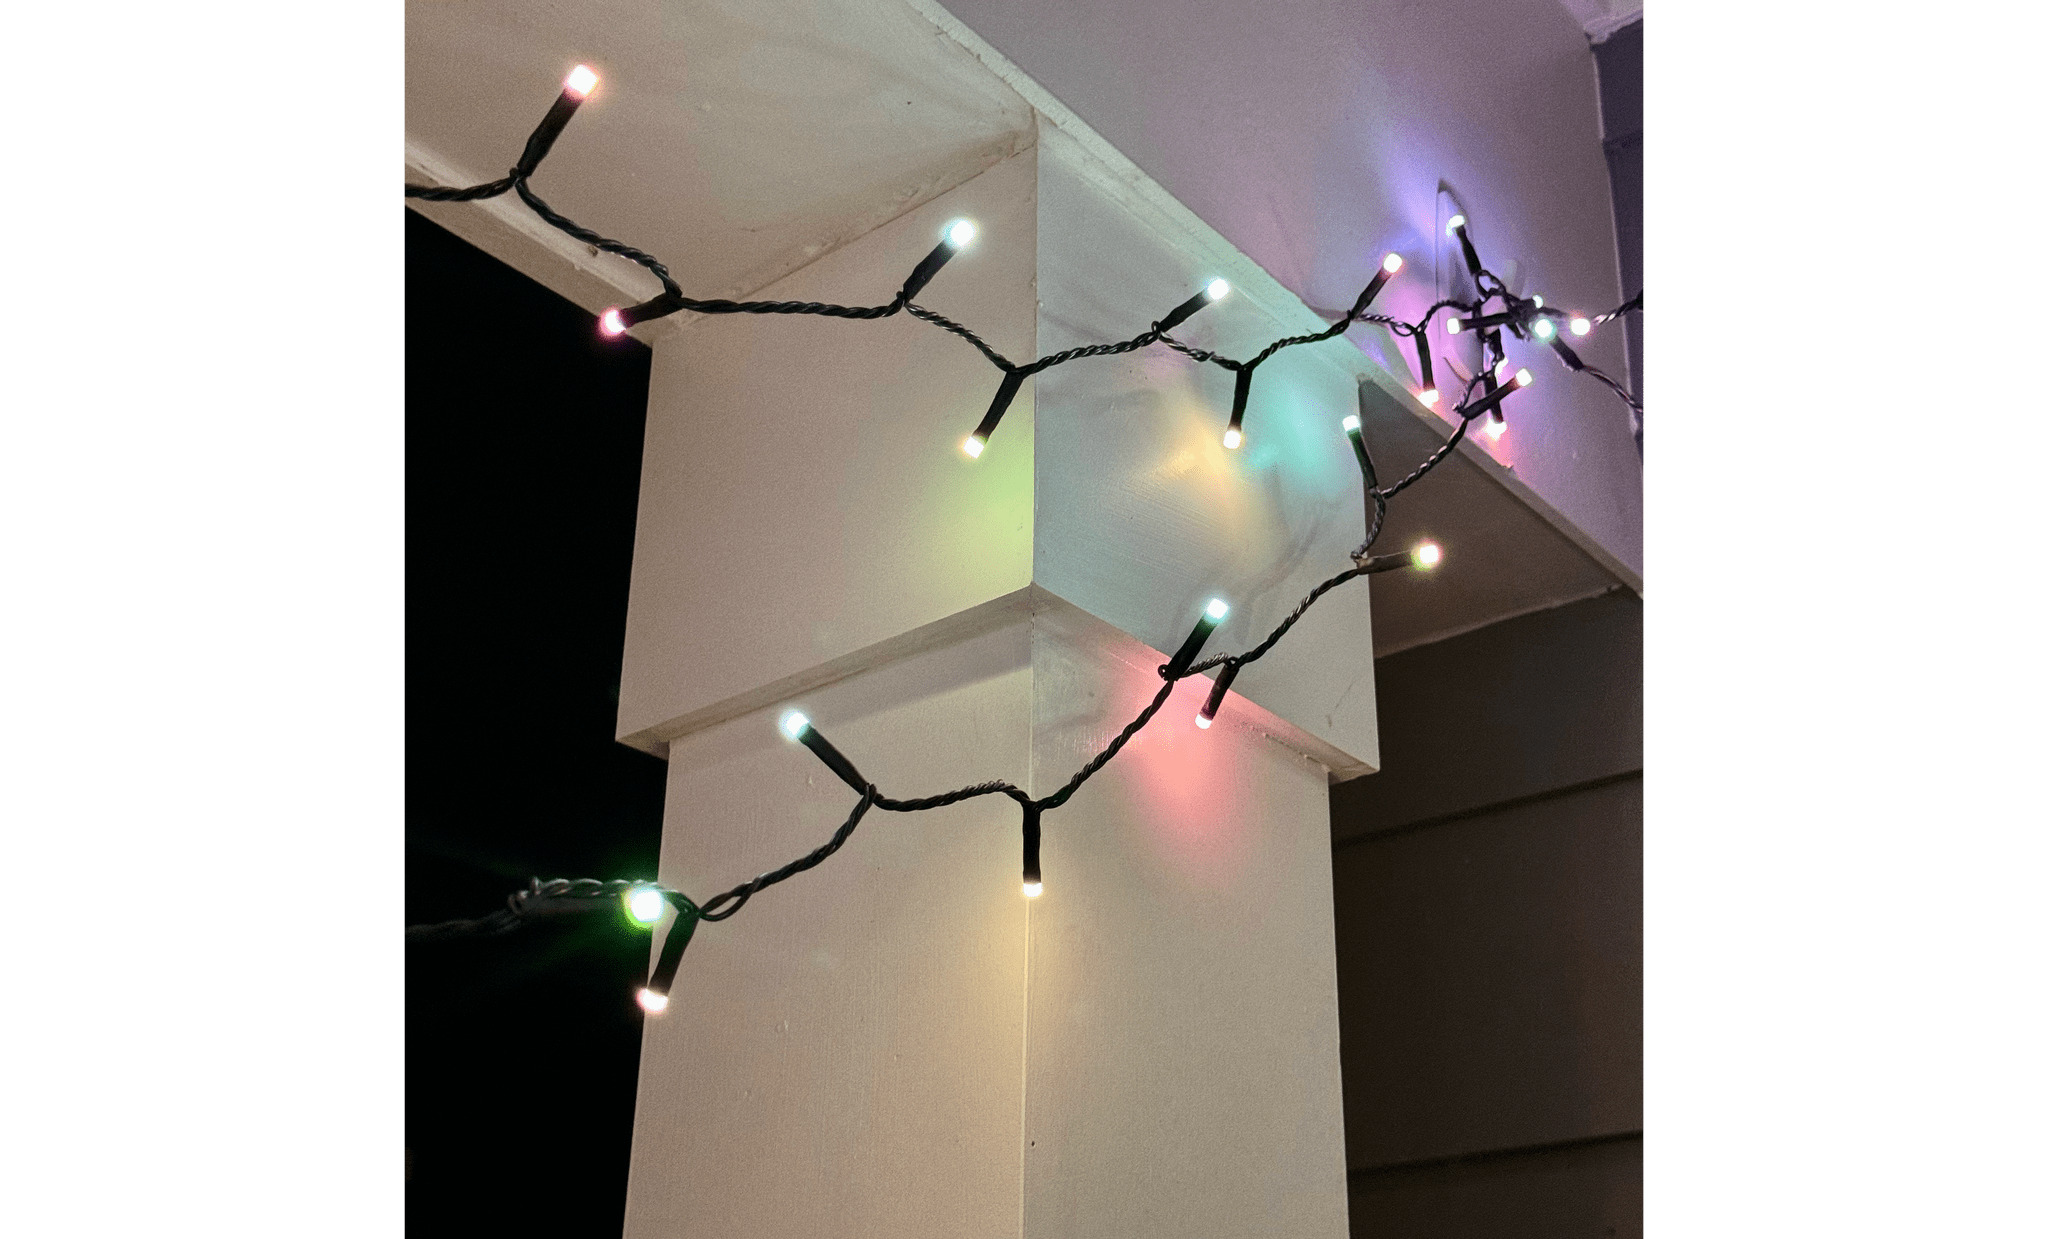 Hue's Festavia string lights.